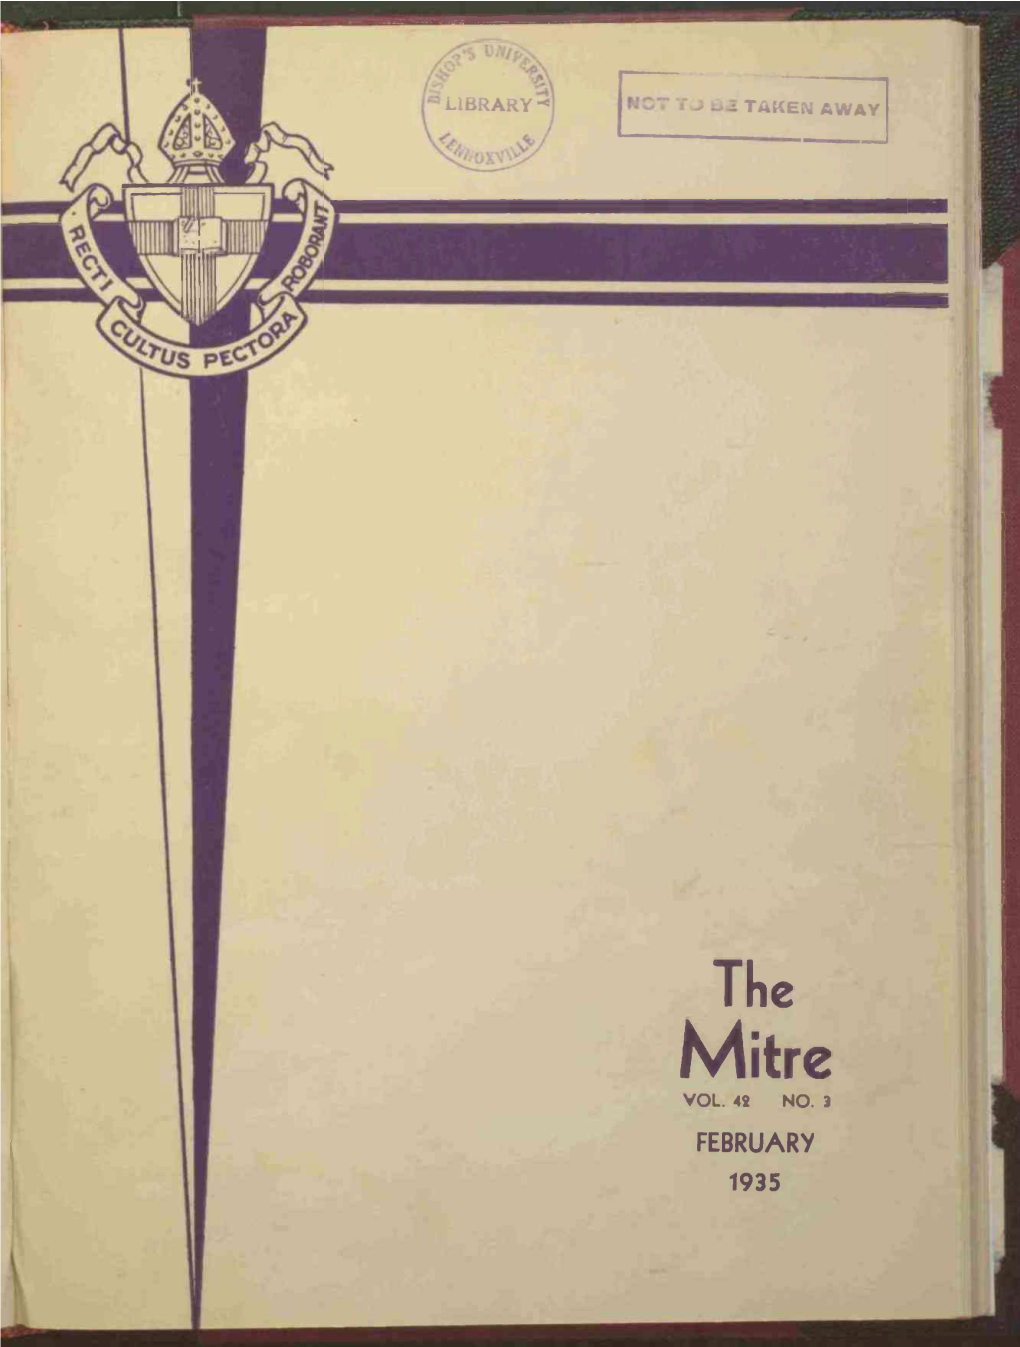 February 1935 the Mitre, Feb